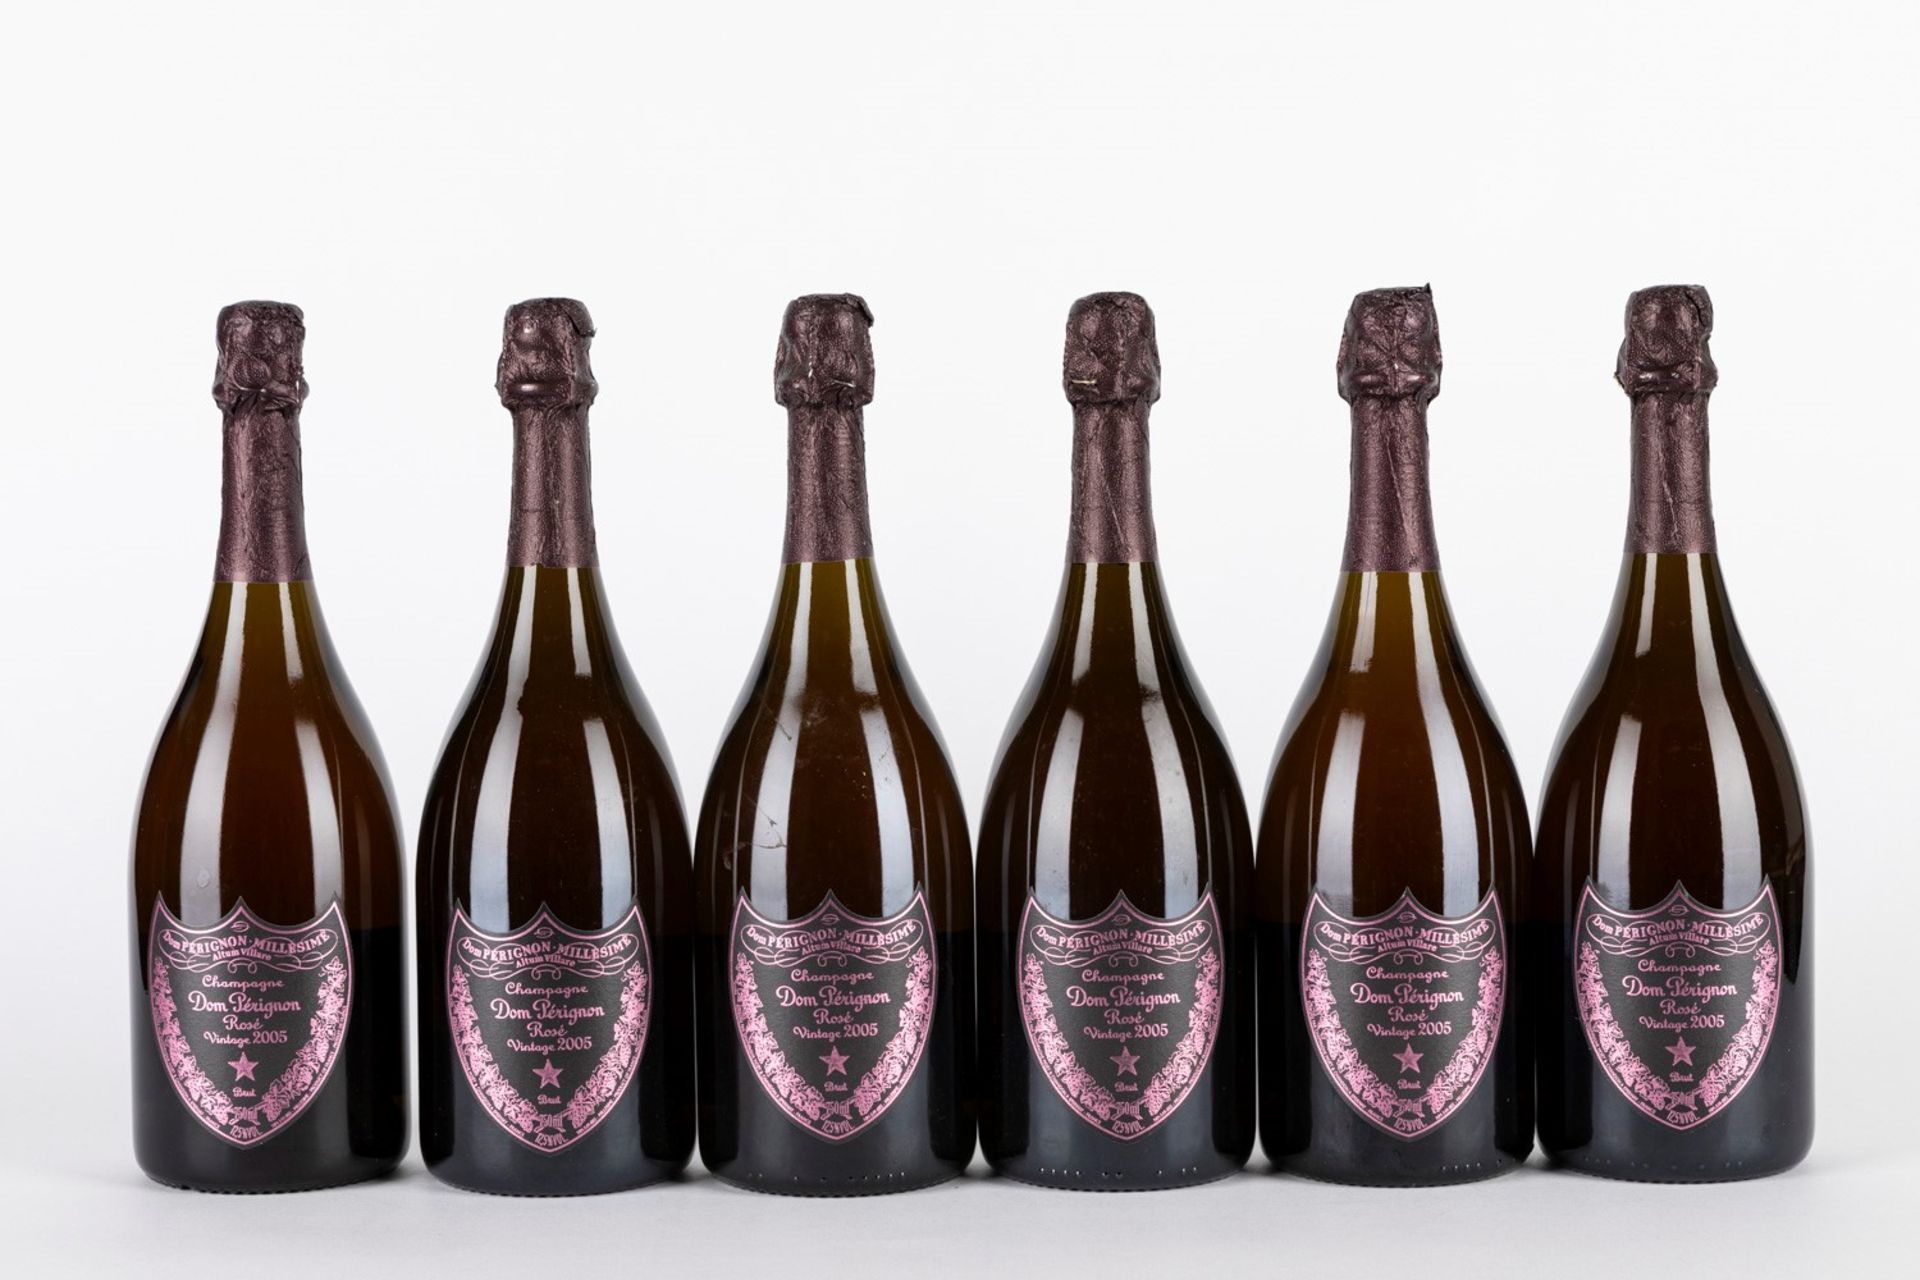 France - Champagne / Dom Perignon Rose' 2005 (6 BT)